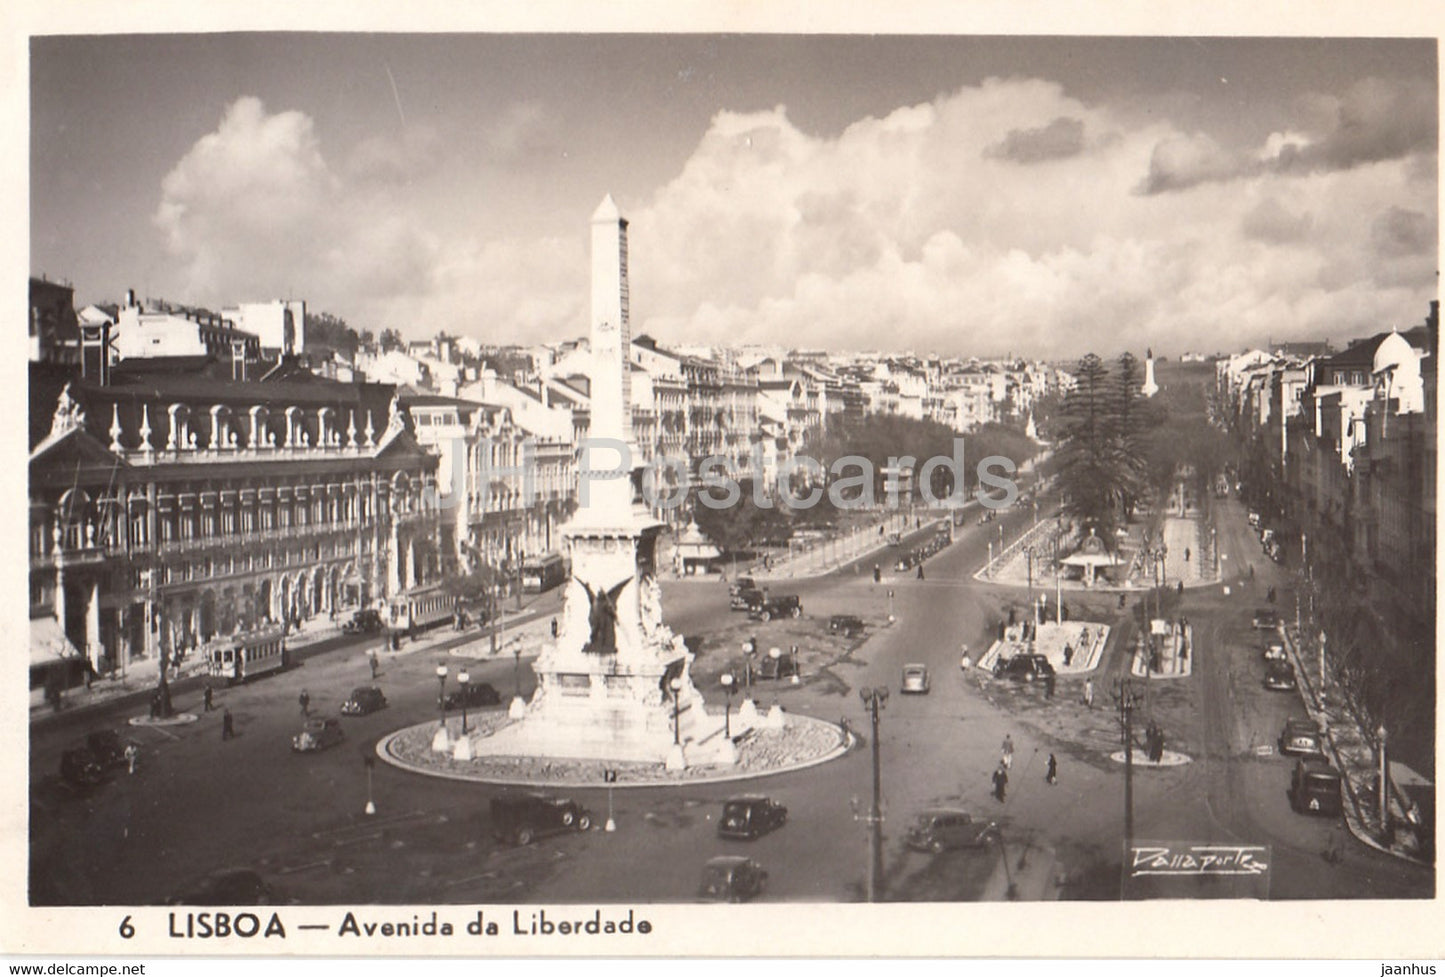 Lisboa - Lisbon - Avenida de Liberdade - 6 - old postcard - 1951 - Portugal - used - JH Postcards